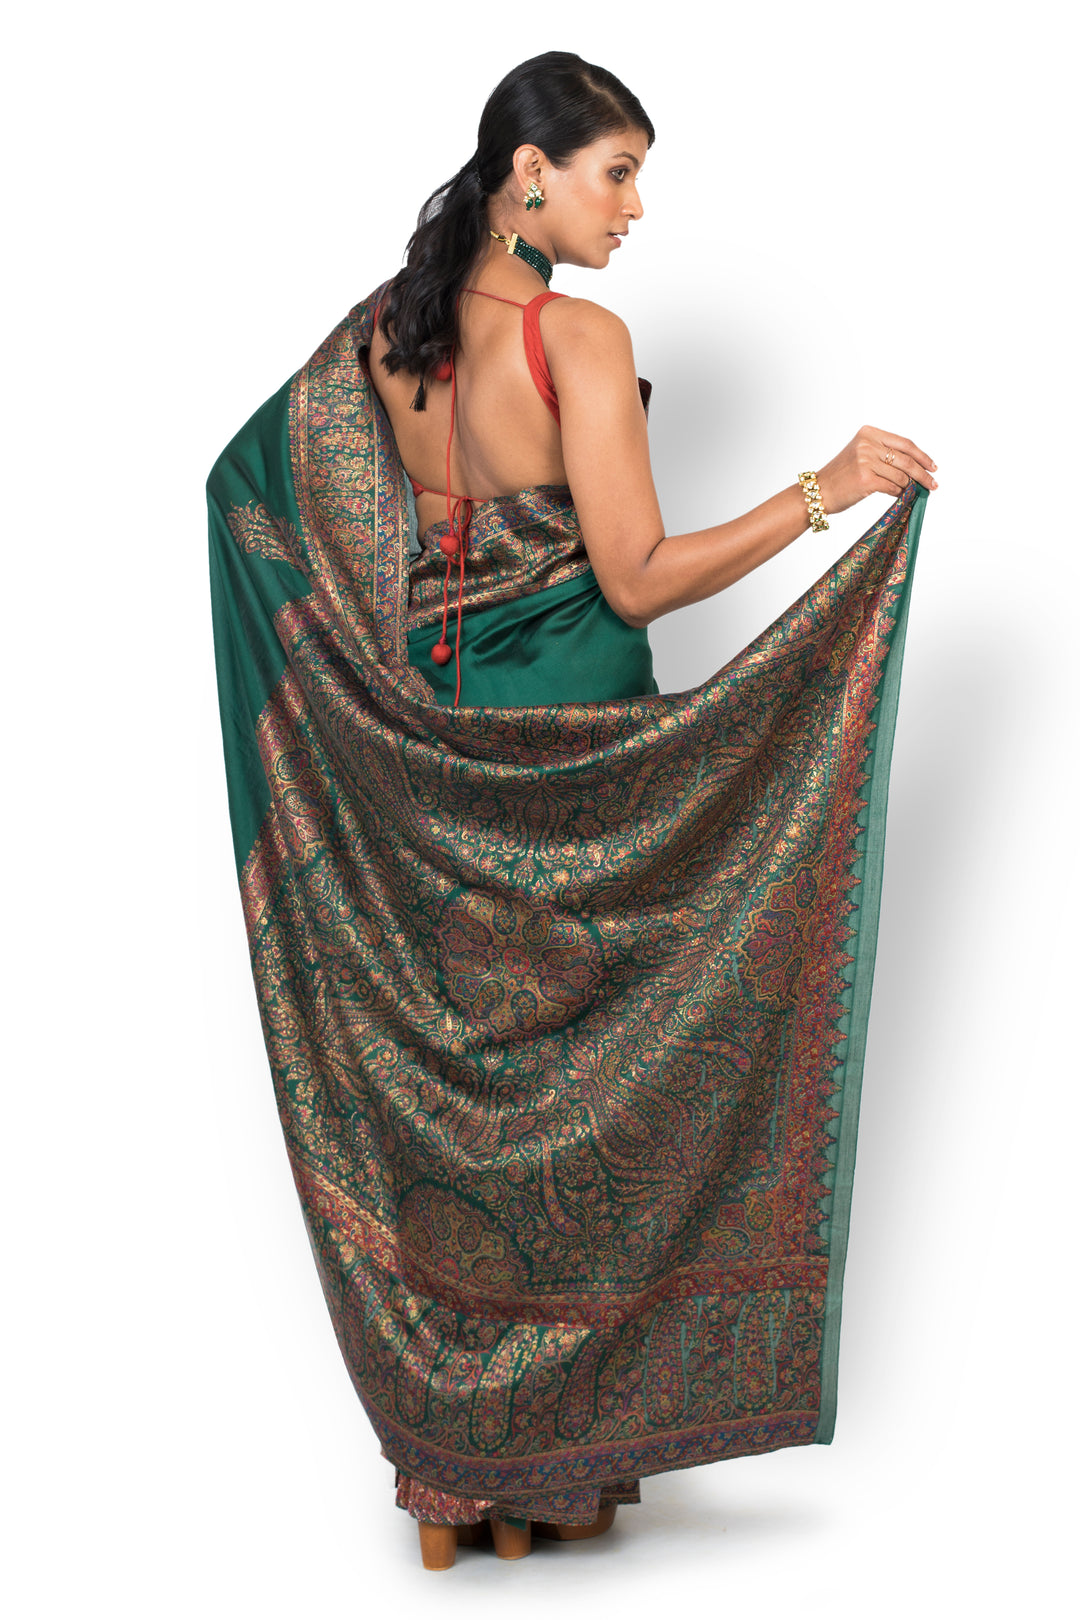 Buy Party Wear Designer Saree In Dark Green Colour At Online Simaaya